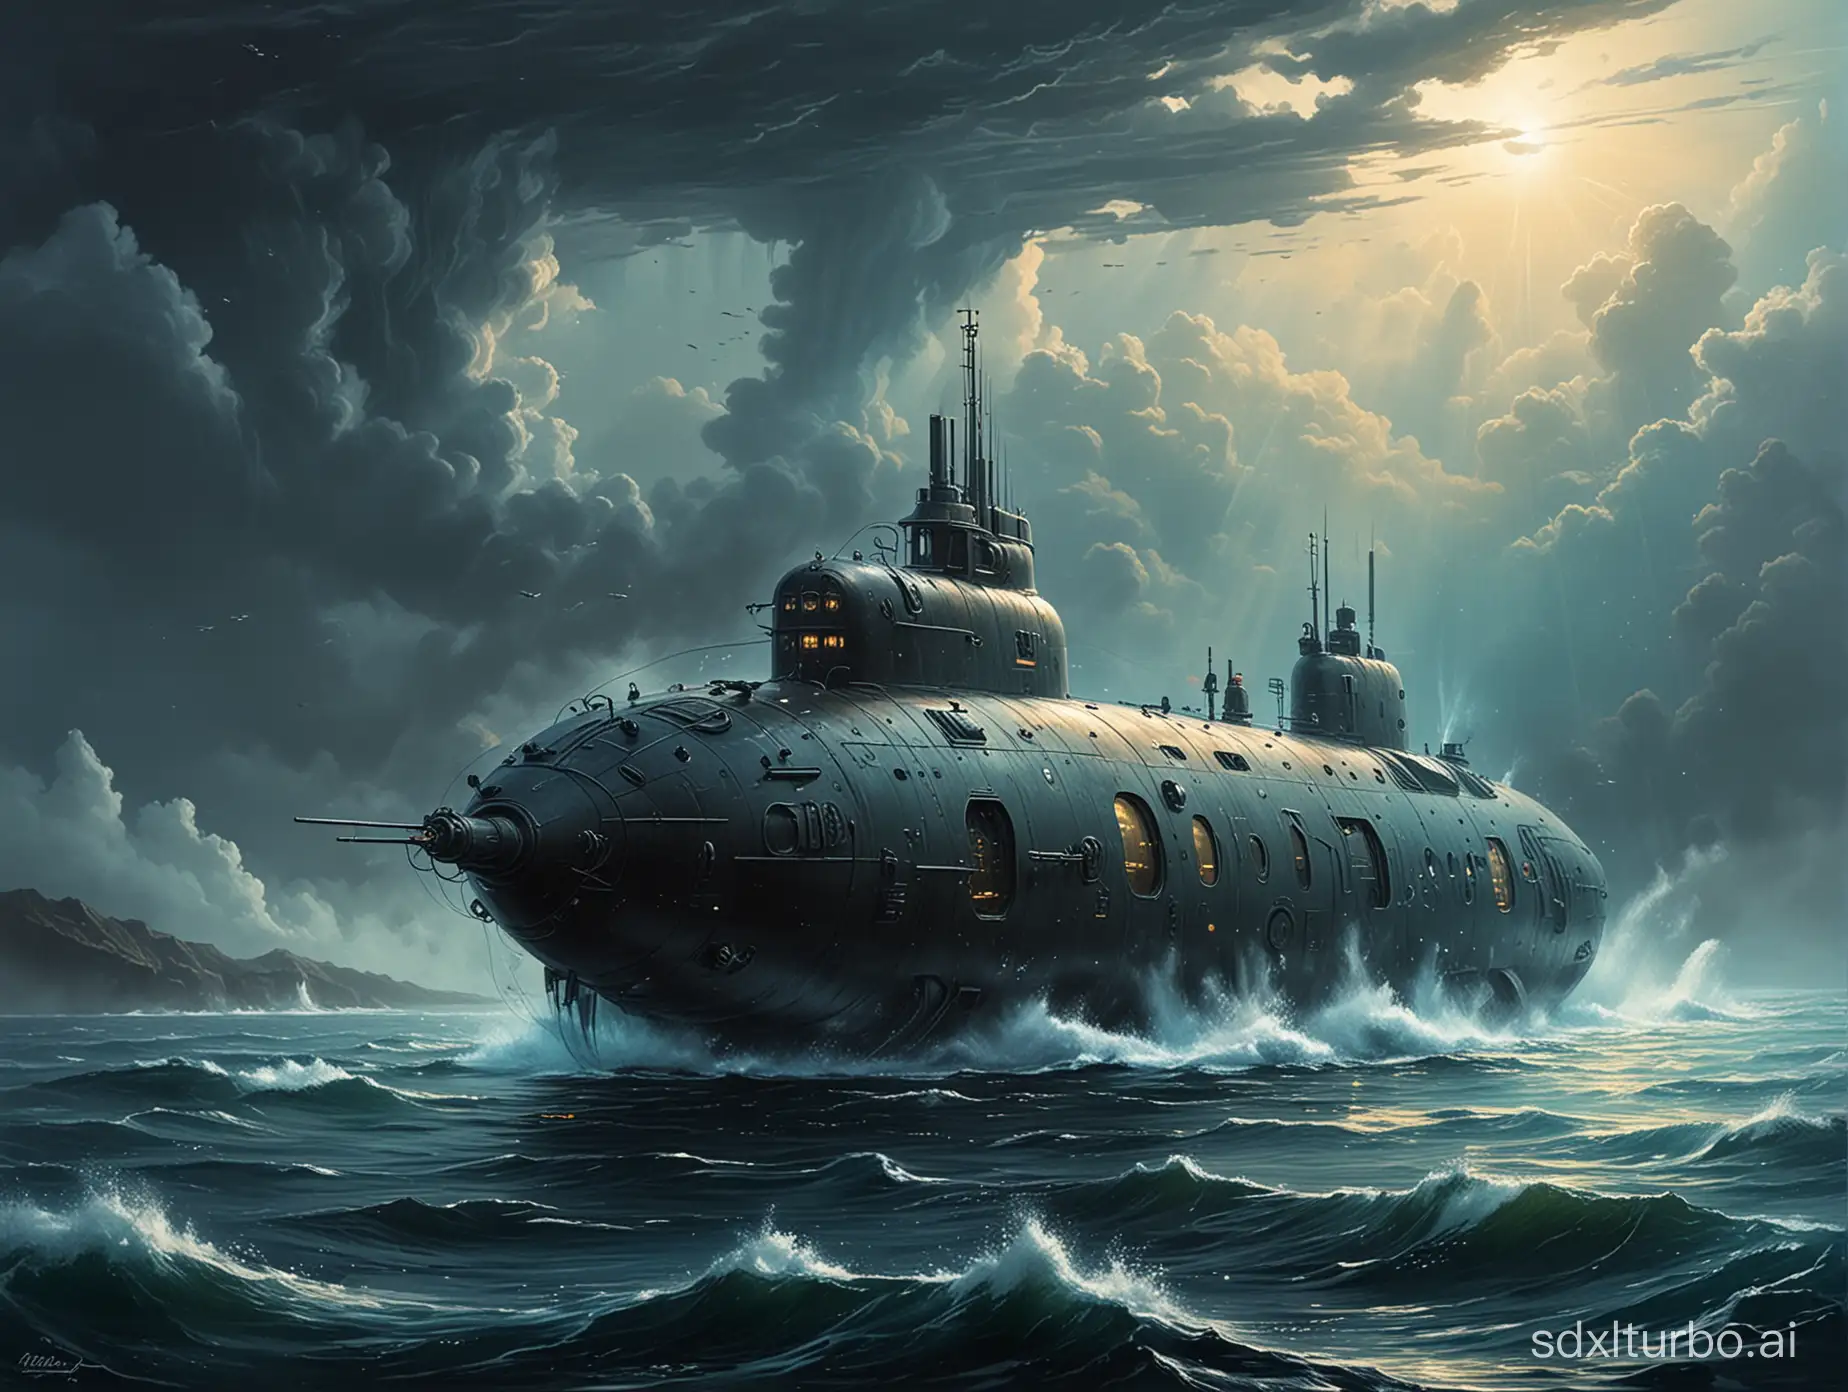 Submarine-Exploration-in-Futuristic-Science-Fiction-Art